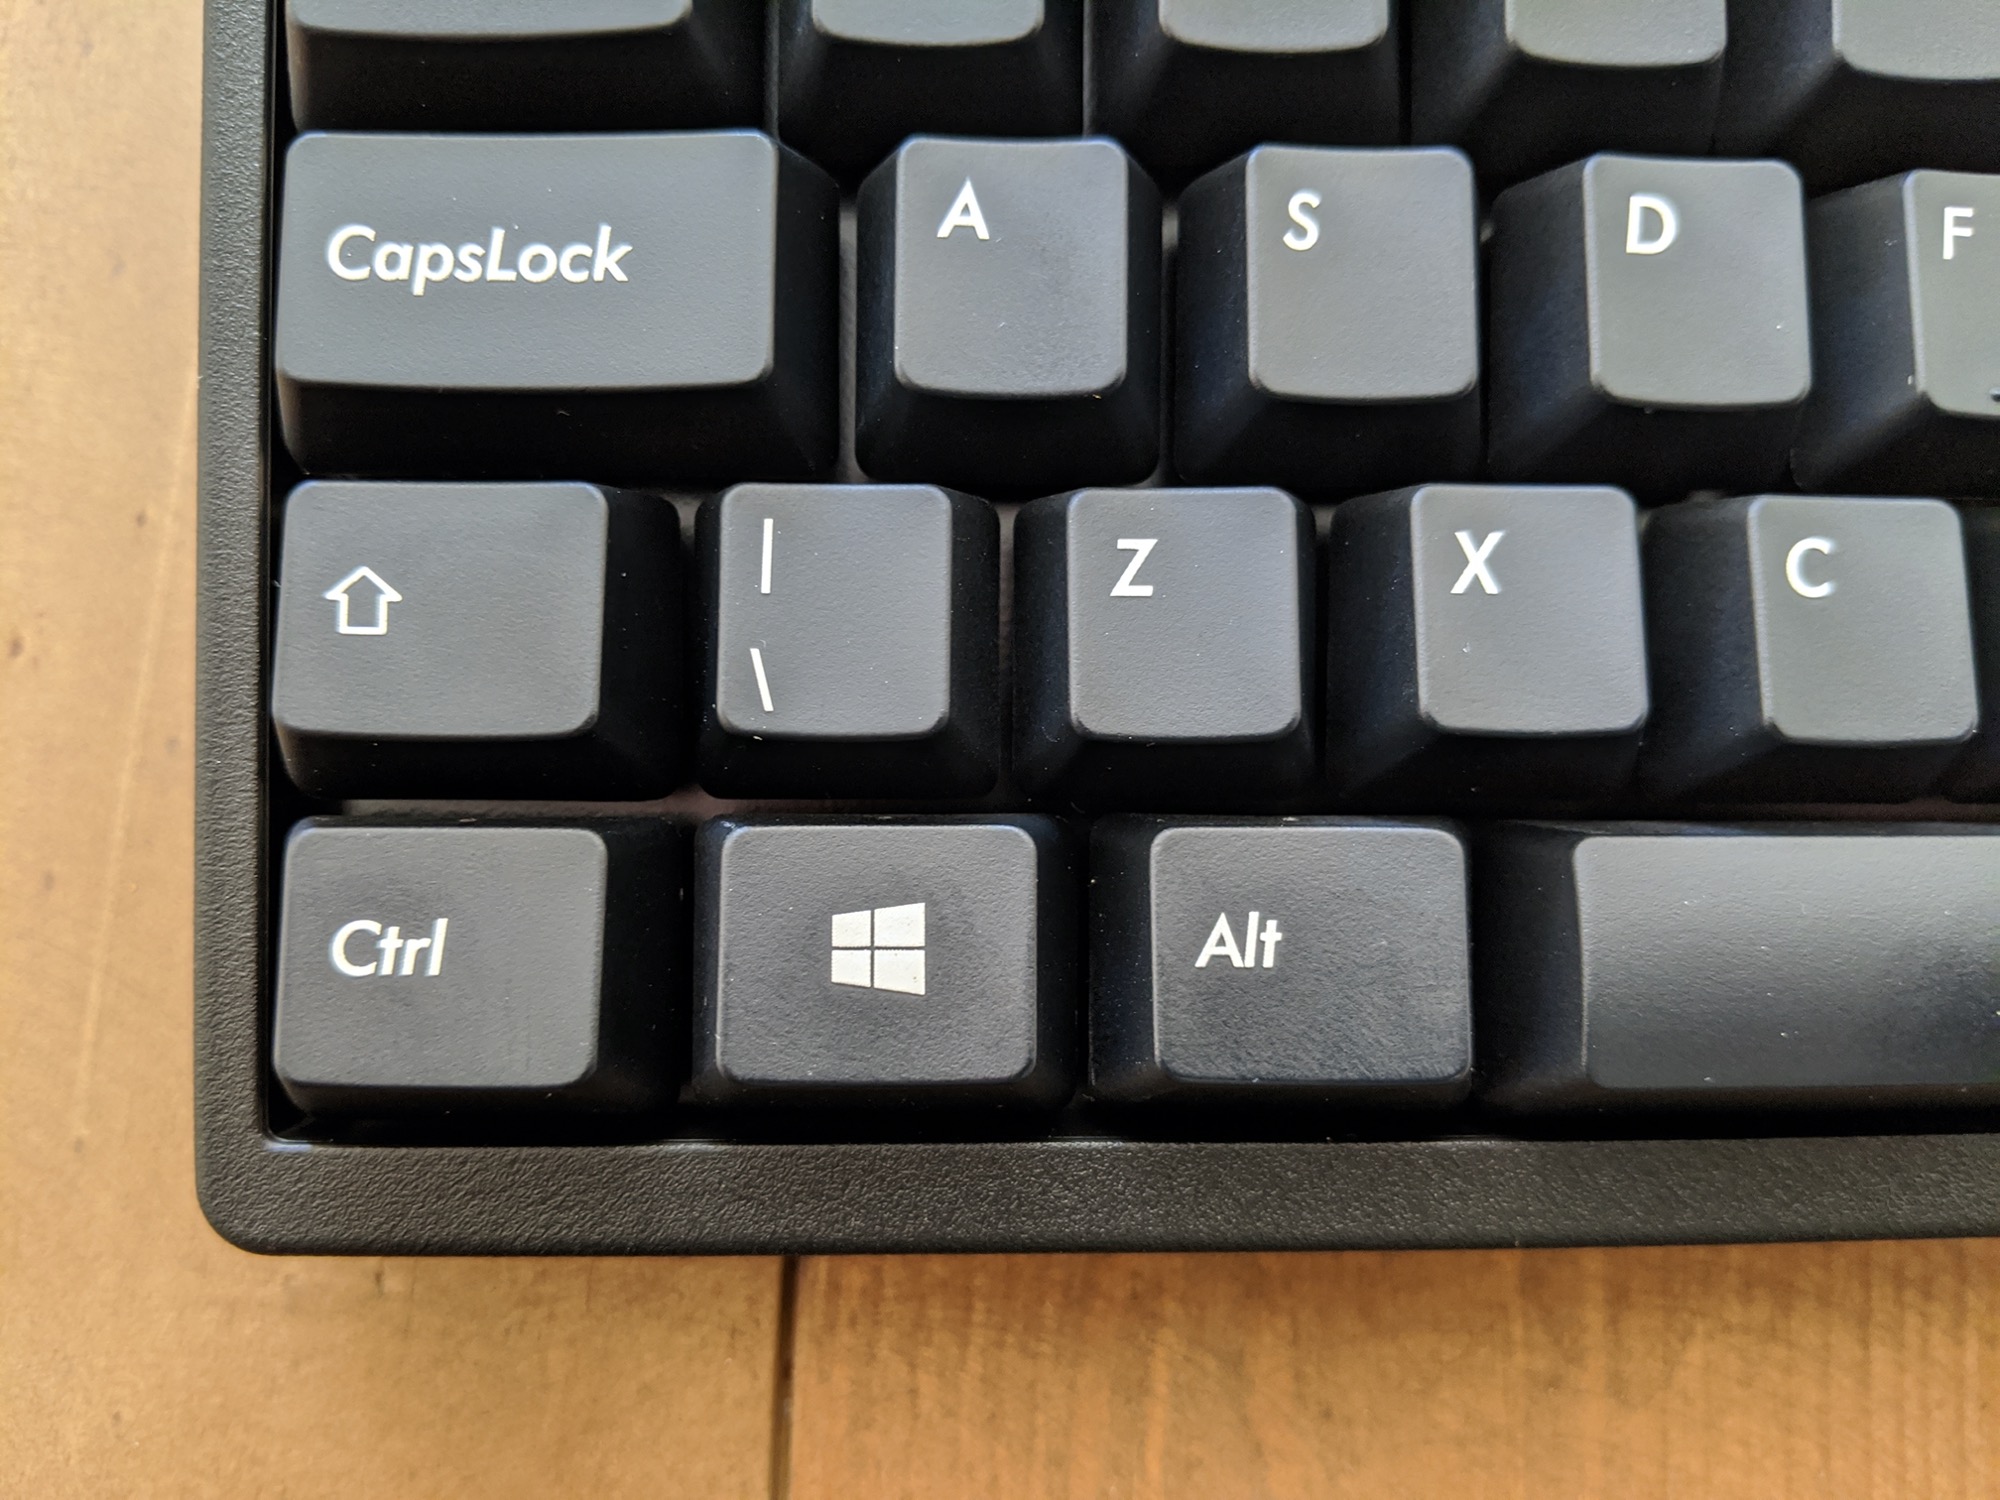 Standard Windows key layout